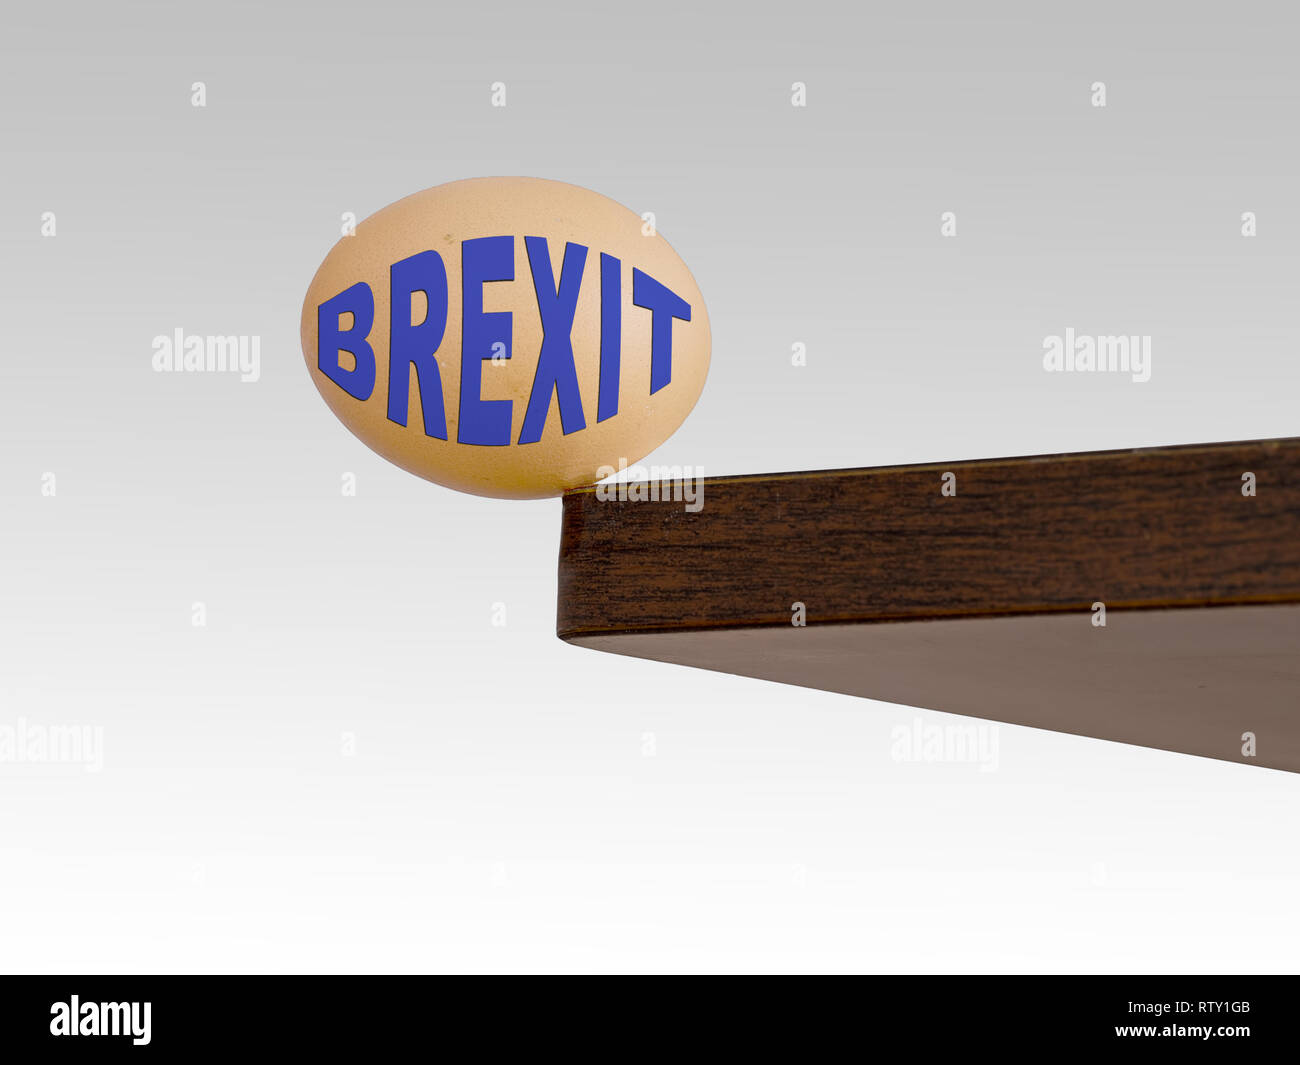 Brexit egg teetering on the edge. Brink. Risk, danger concept or metaphor. EU UK politics. Stock Photo